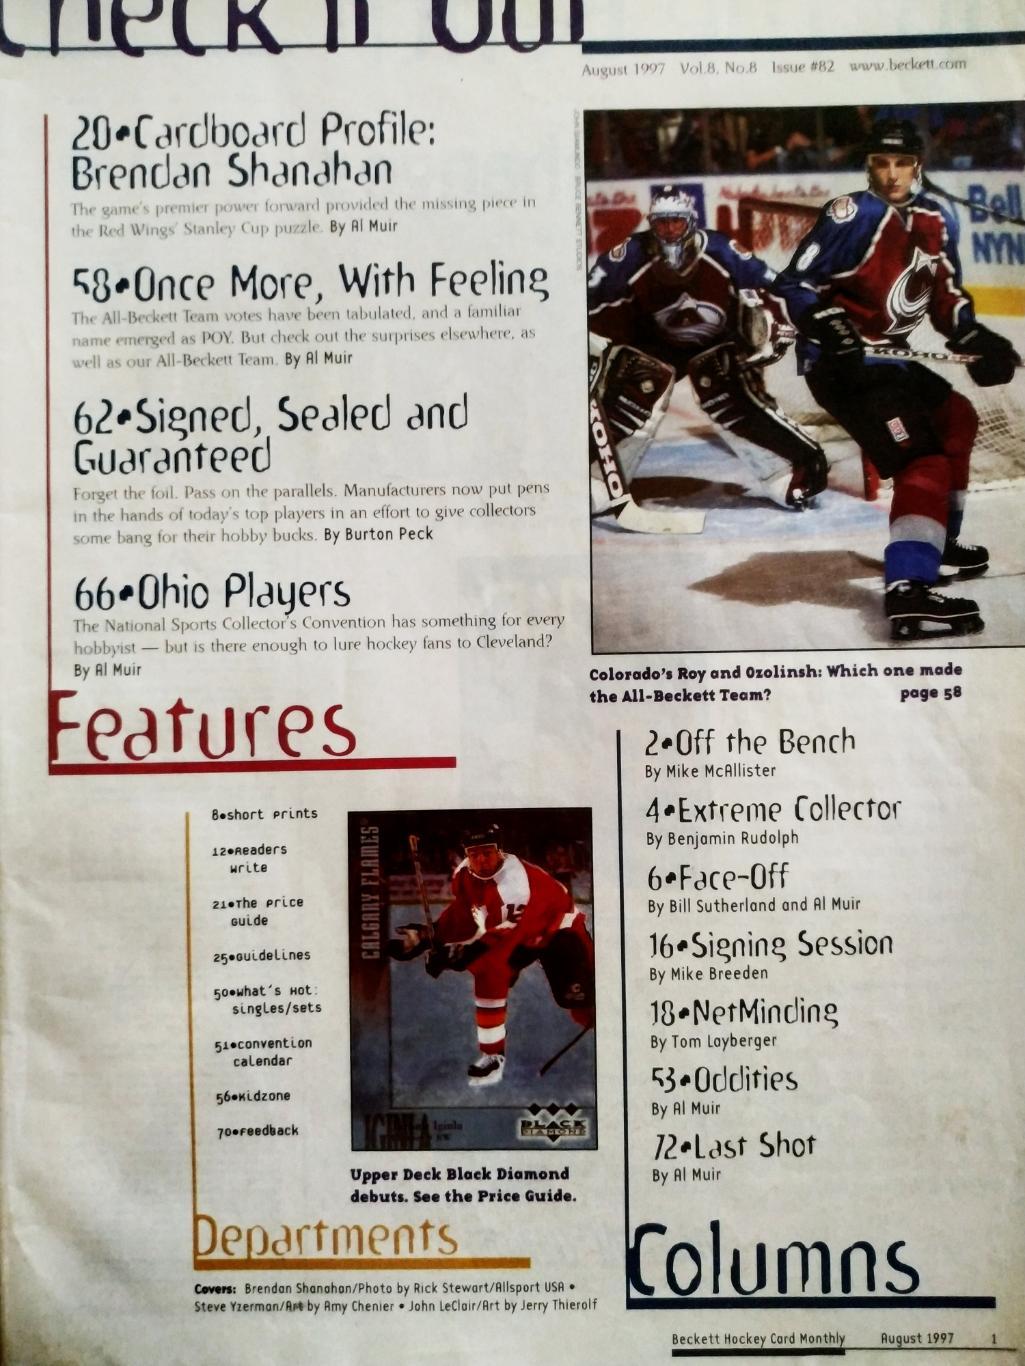 ЖУРНАЛ ЕЖЕМЕСЯЧНИК ХОККИ БЭККЕТ НХЛ NHL 1997 AUG BECKETT HOCKEY MAGAZINE #82 1